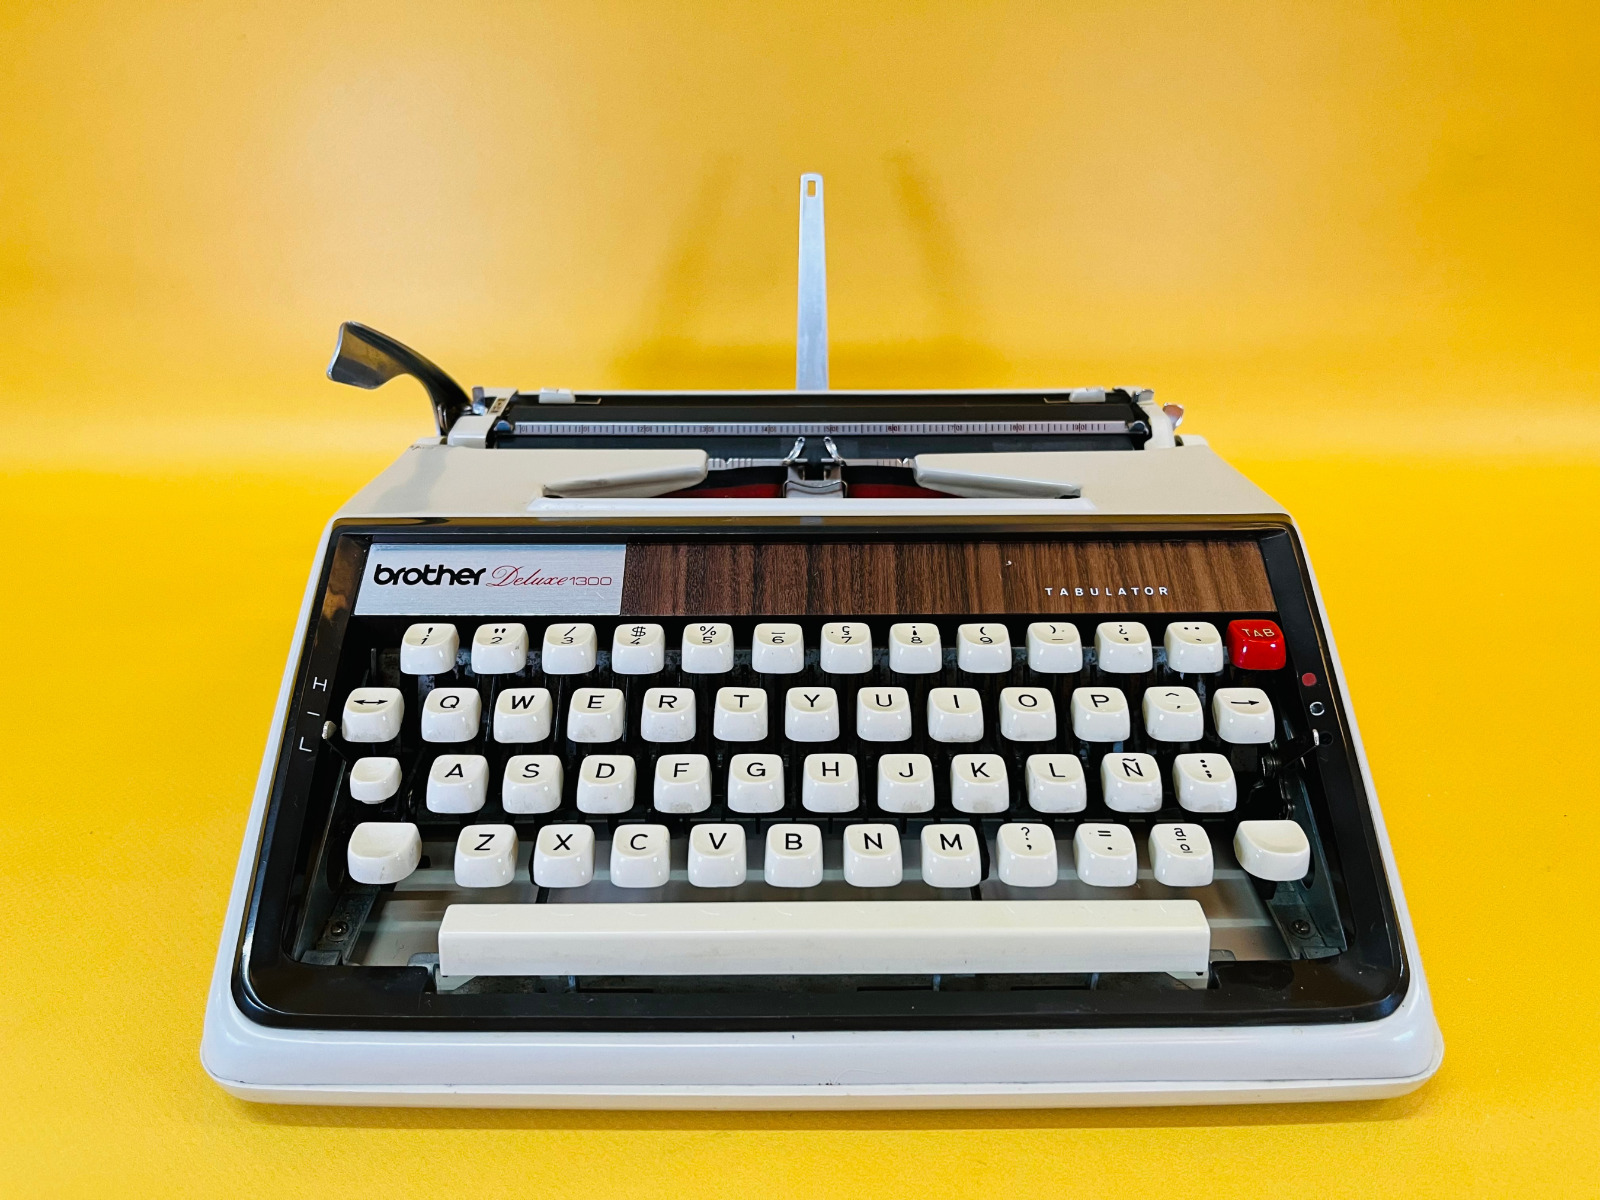 Working Typewriter BROTHER Deluxe 1300 Tabulator with Case Beige Typewriter Gift